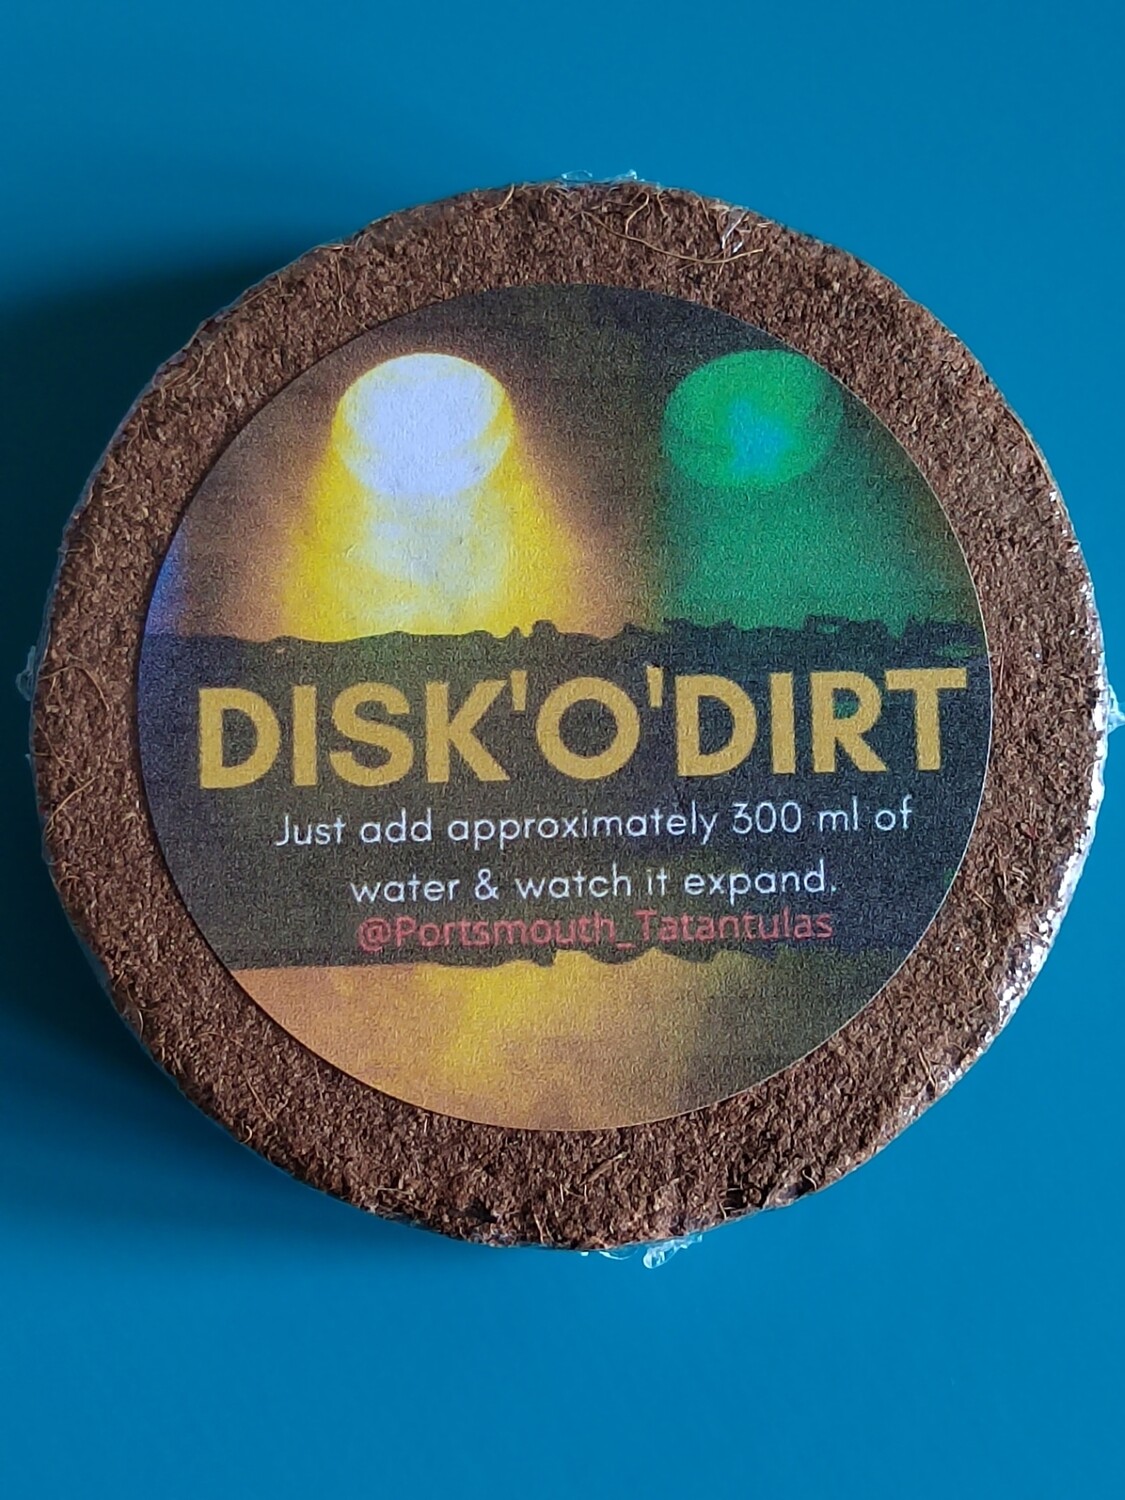 Disk'O'dirt